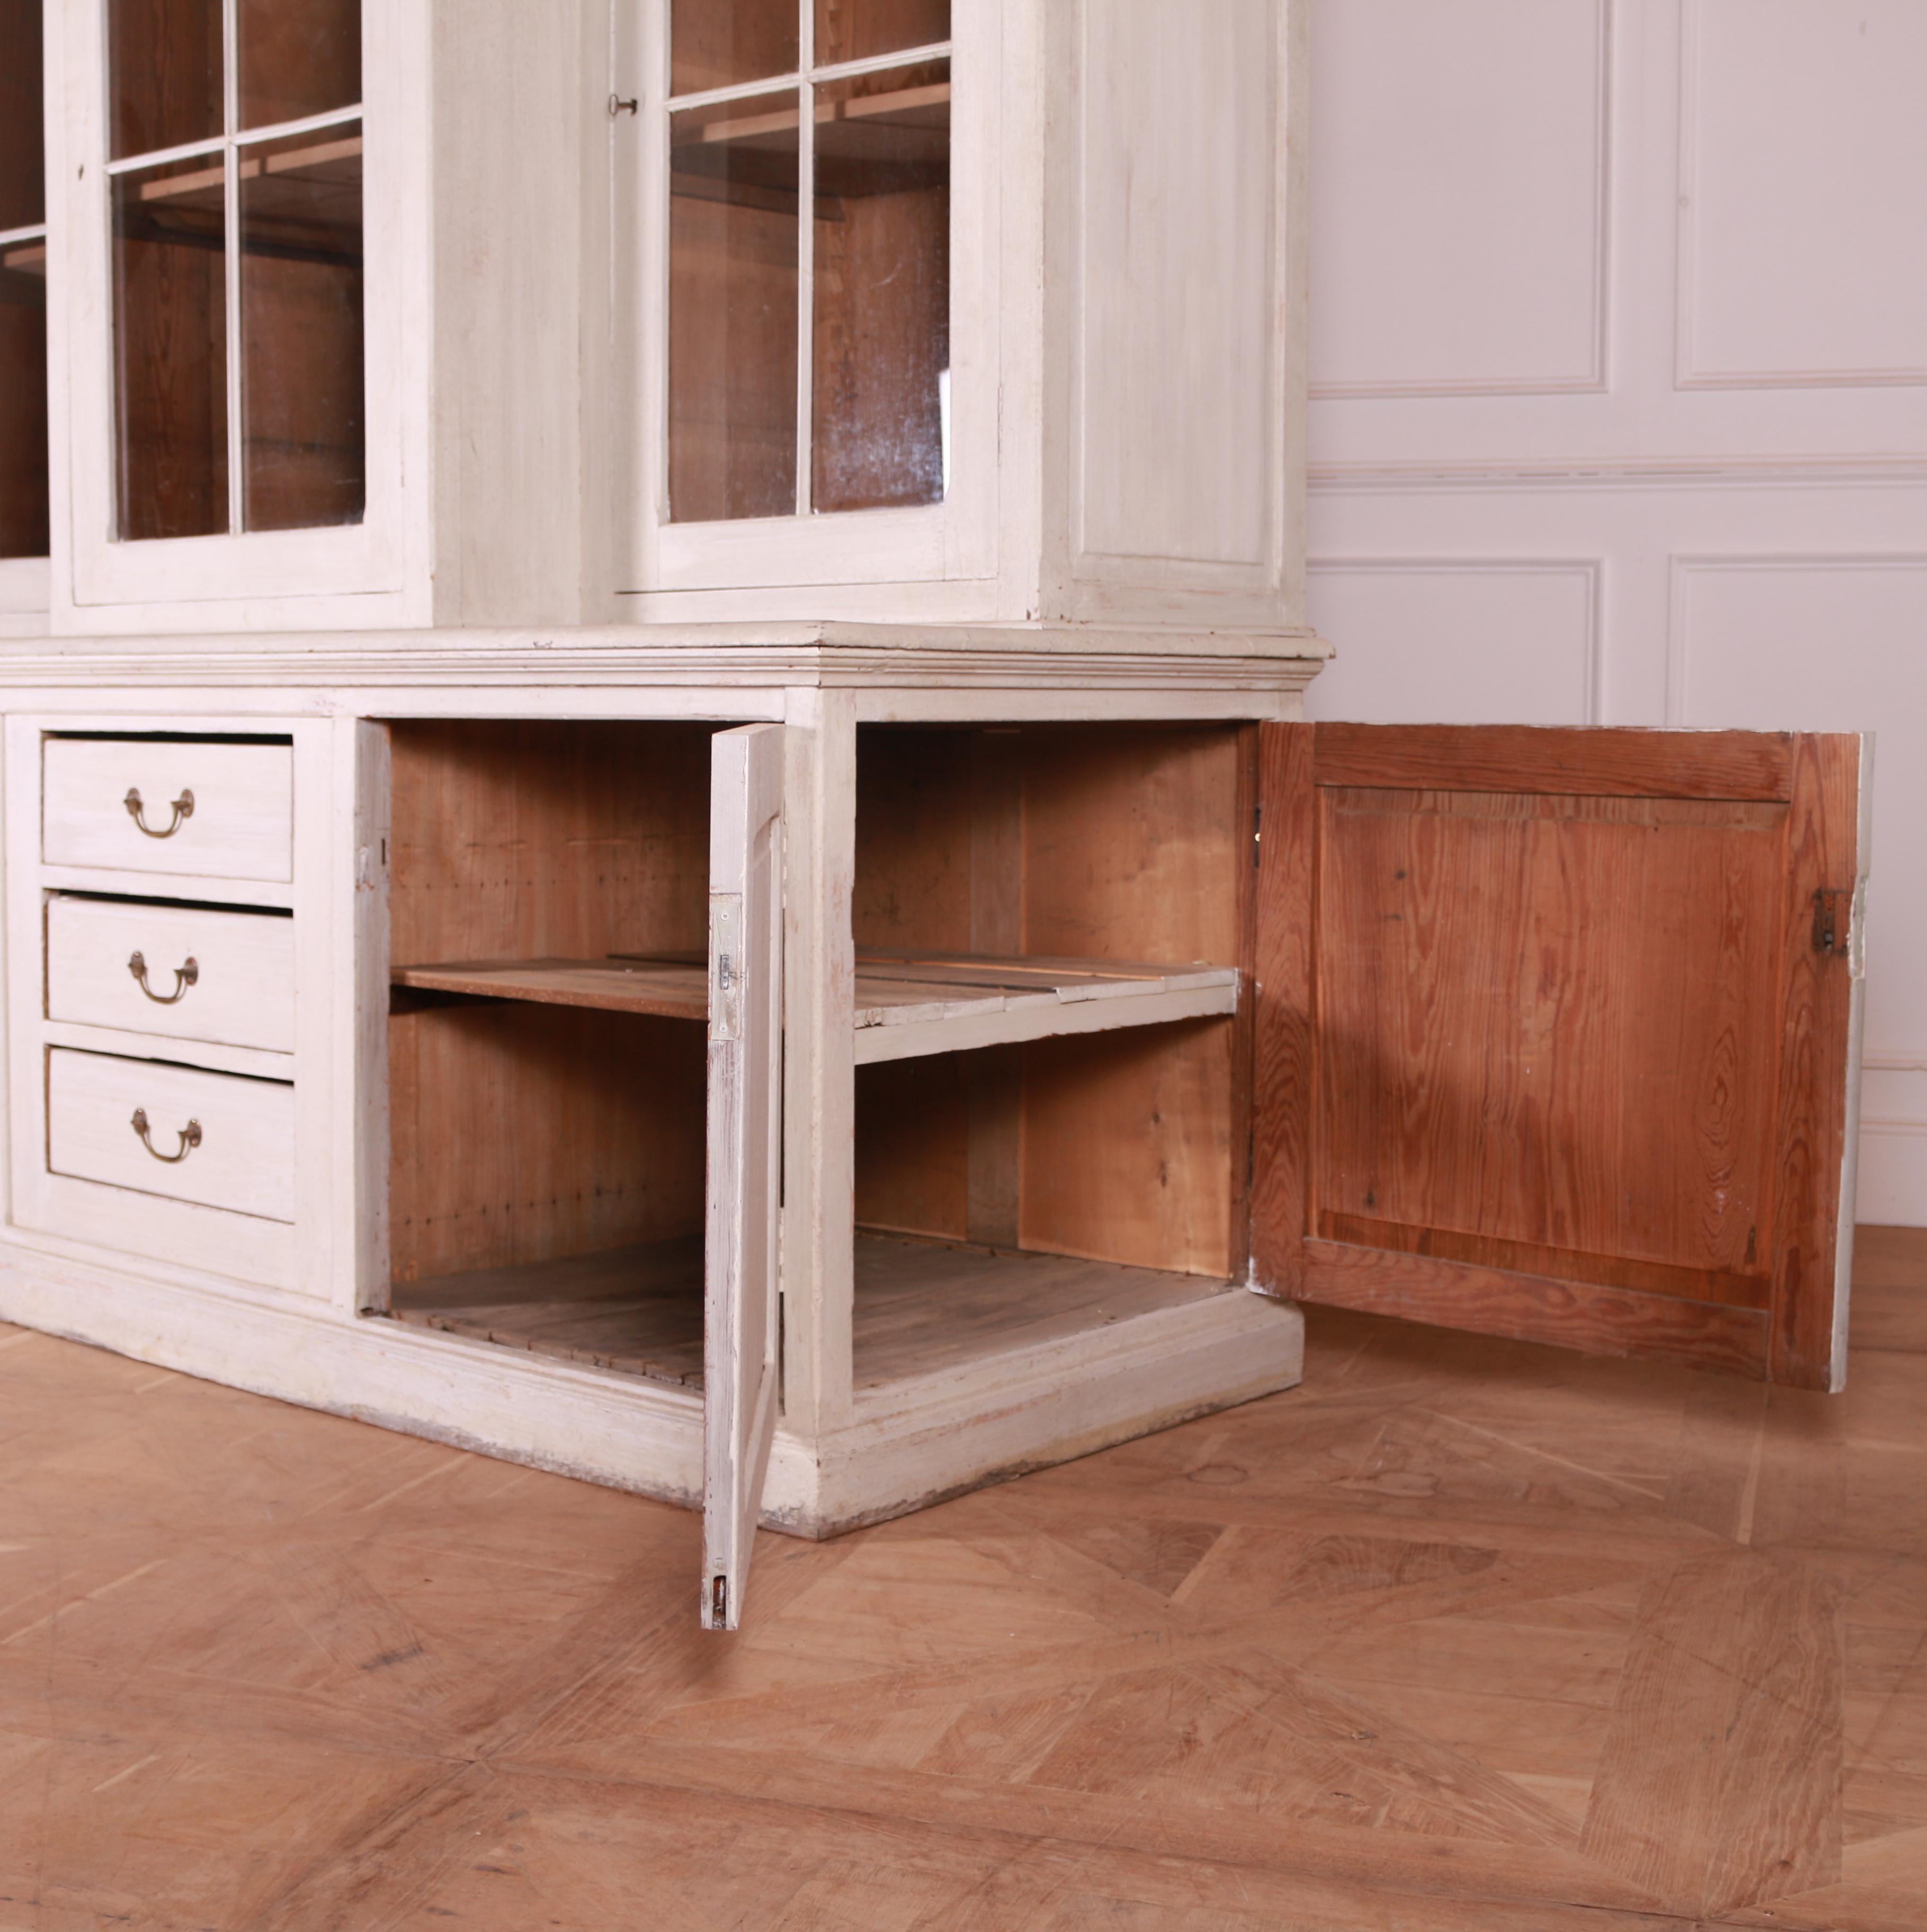 Pine Glazed Breakfront Kitchen Cabinet For Sale